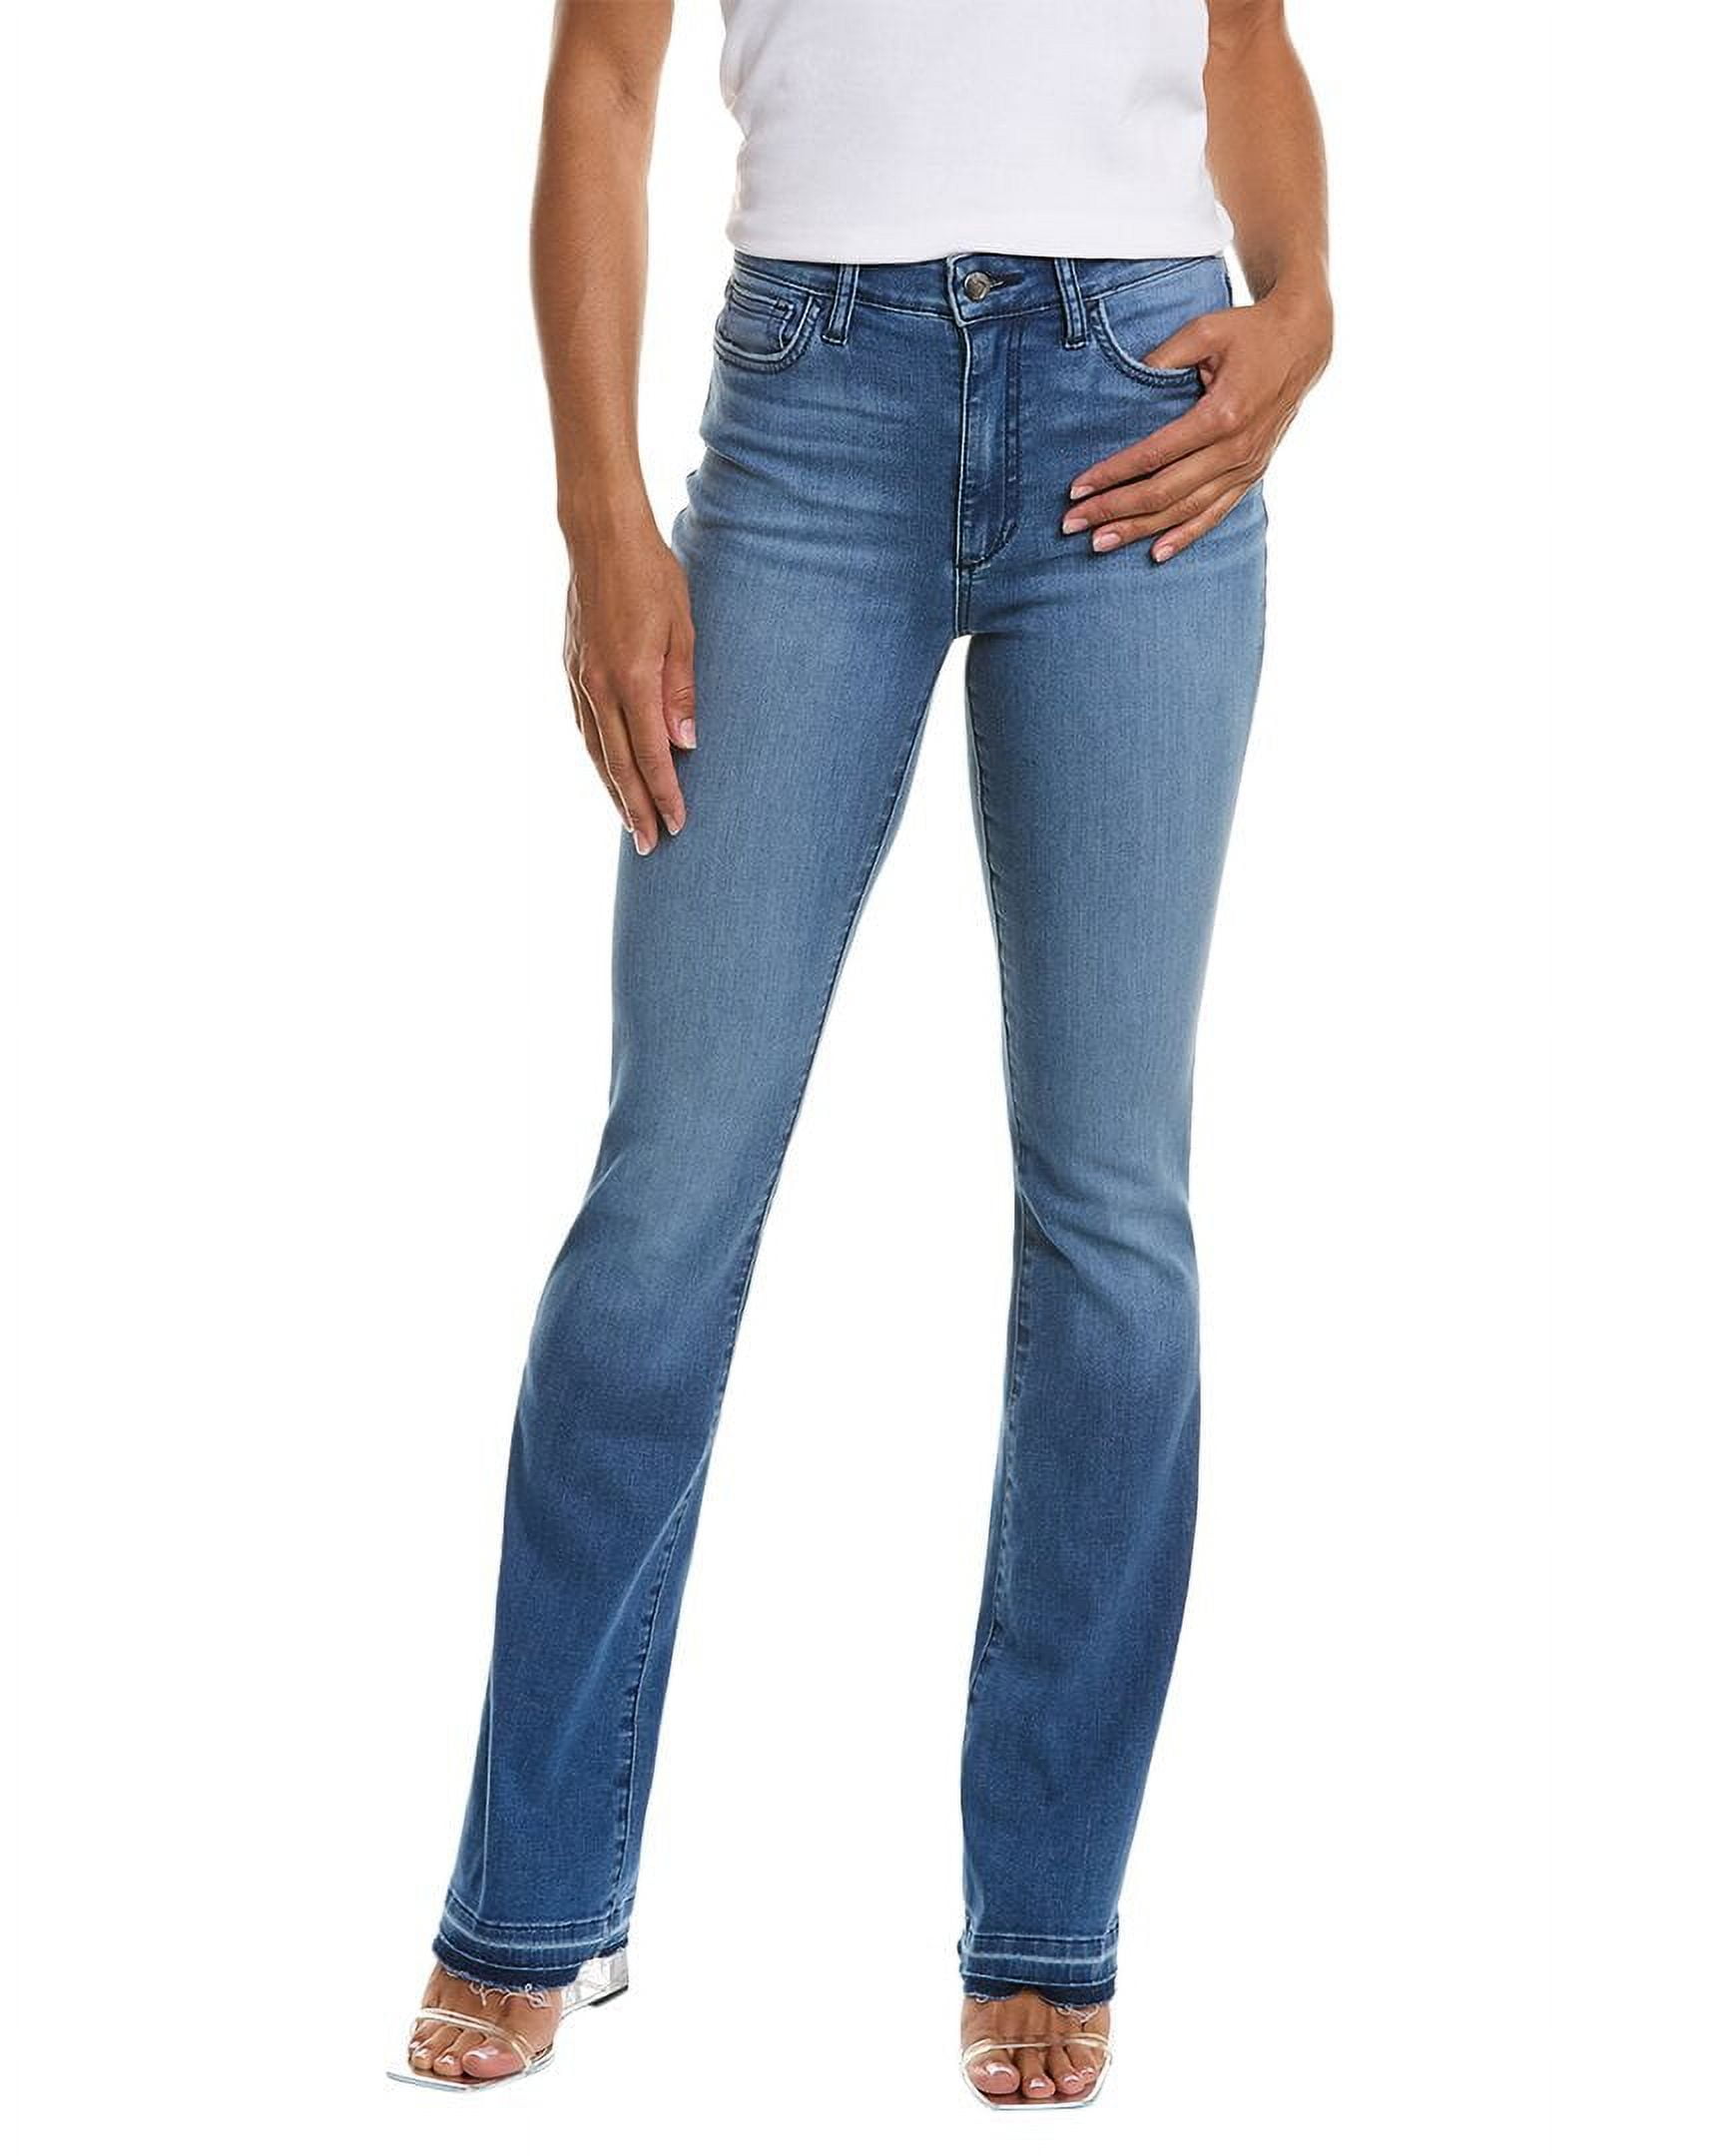 JOE'S Jeans womens Morena High-Rise Curvy Bootcut Jean, 23, Blue